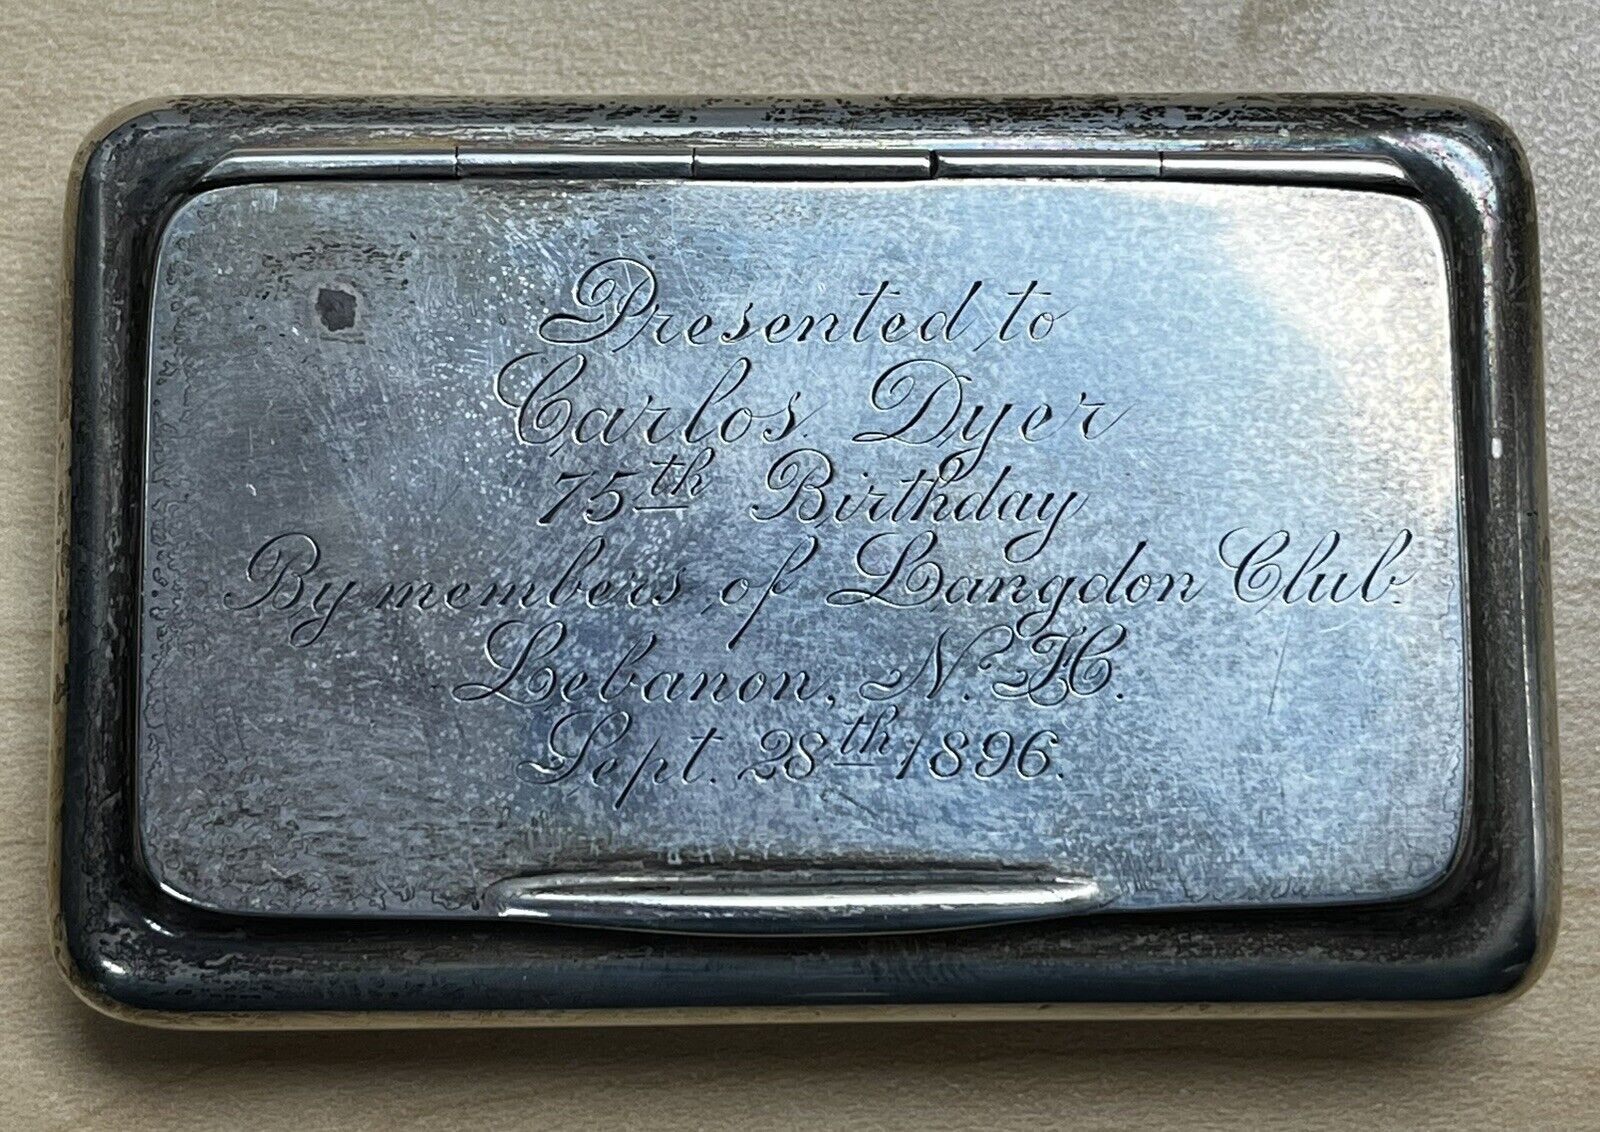 Huge Sterling Silver Snuff Box Langdon Club Lebanon NH 1896 Carlos Dyer 92 Grams